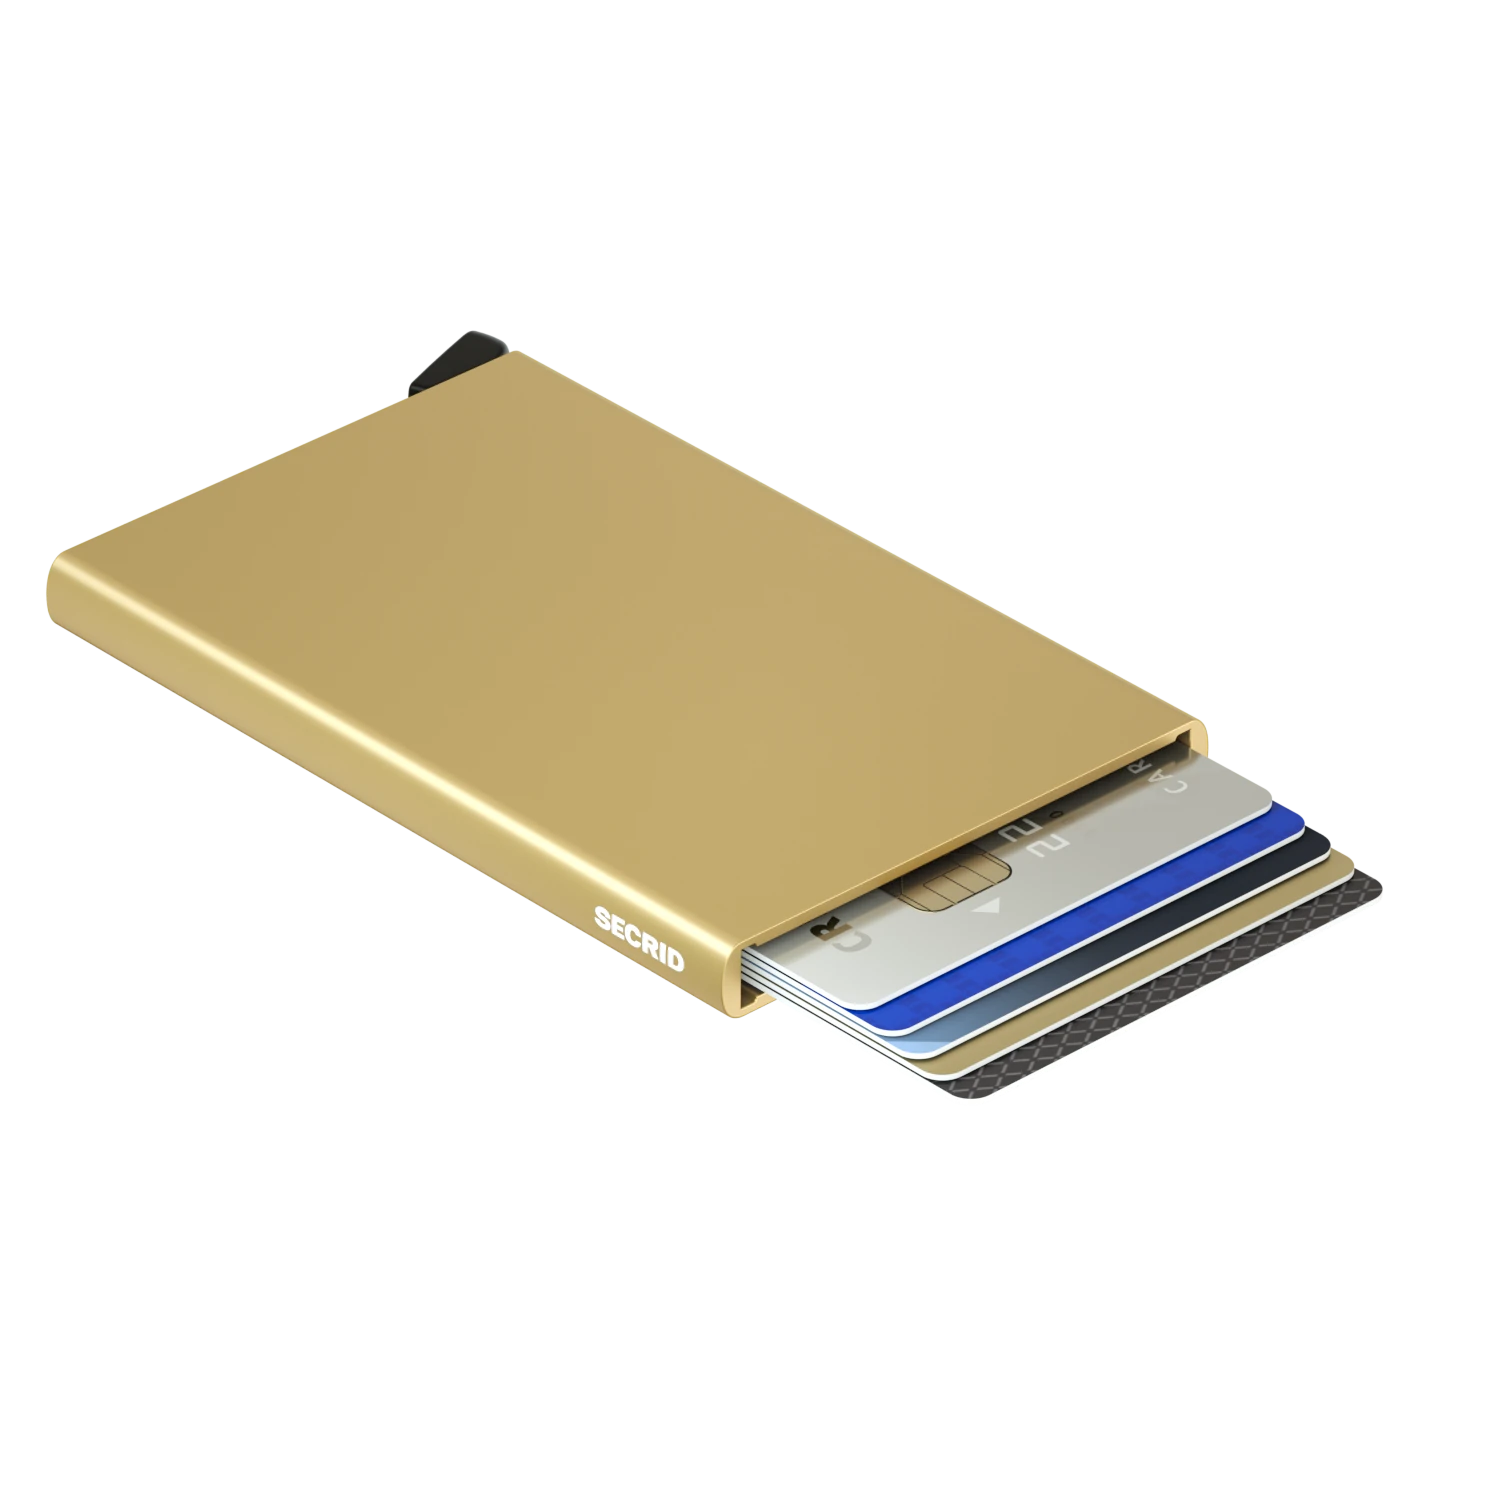 Secrid Cardprotector - Gold